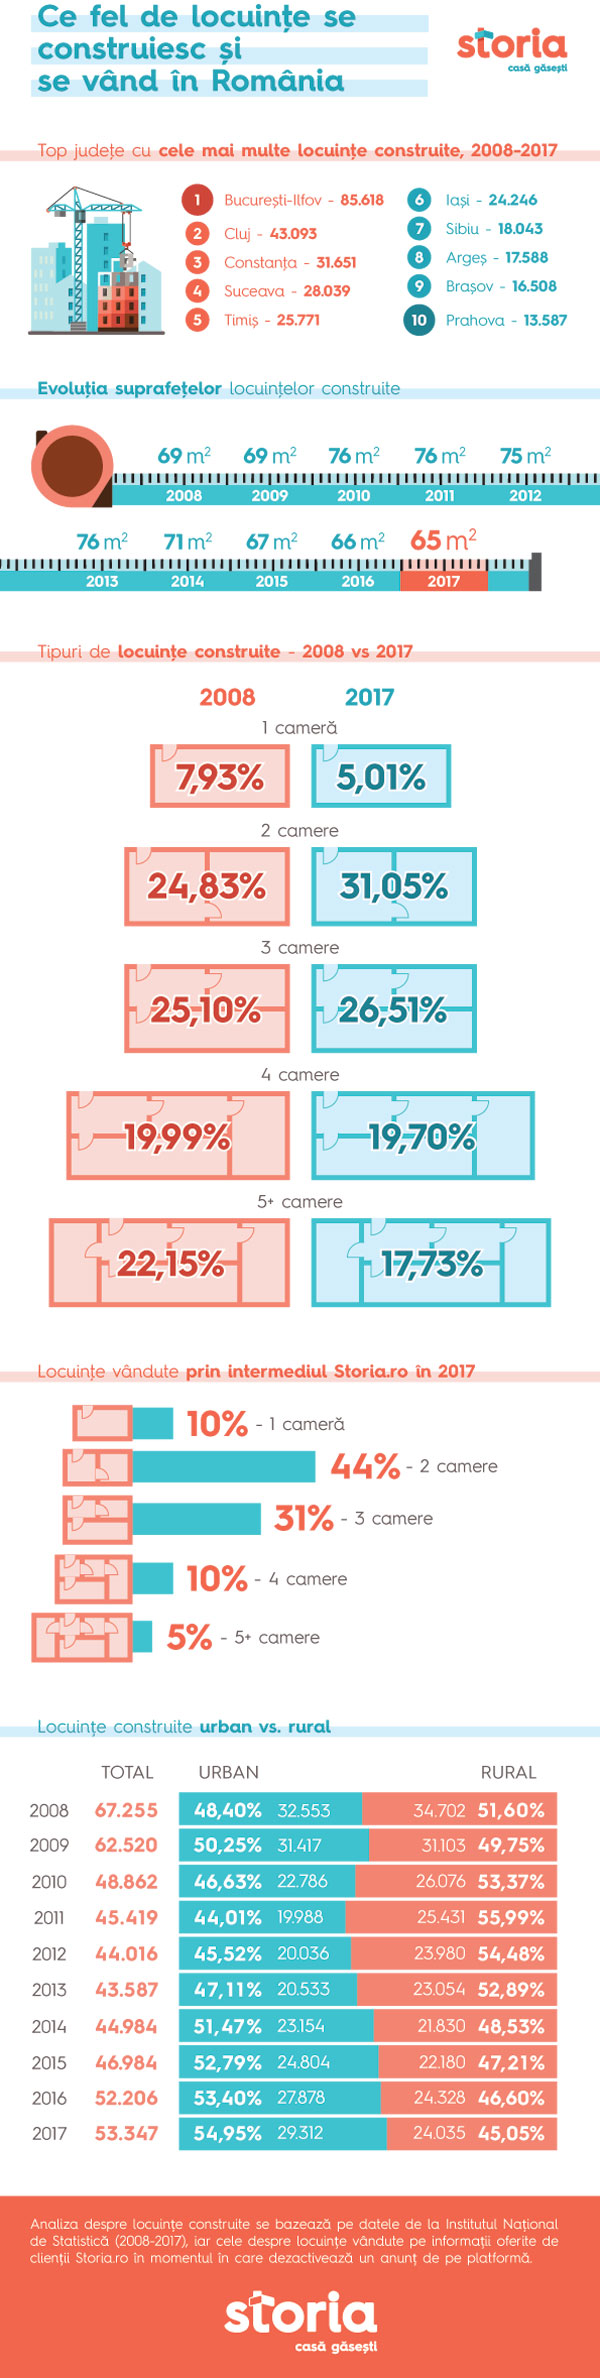 Infografic Analiza Storia.ro Ce fel de locuinte se construiesc si se vand in Romania